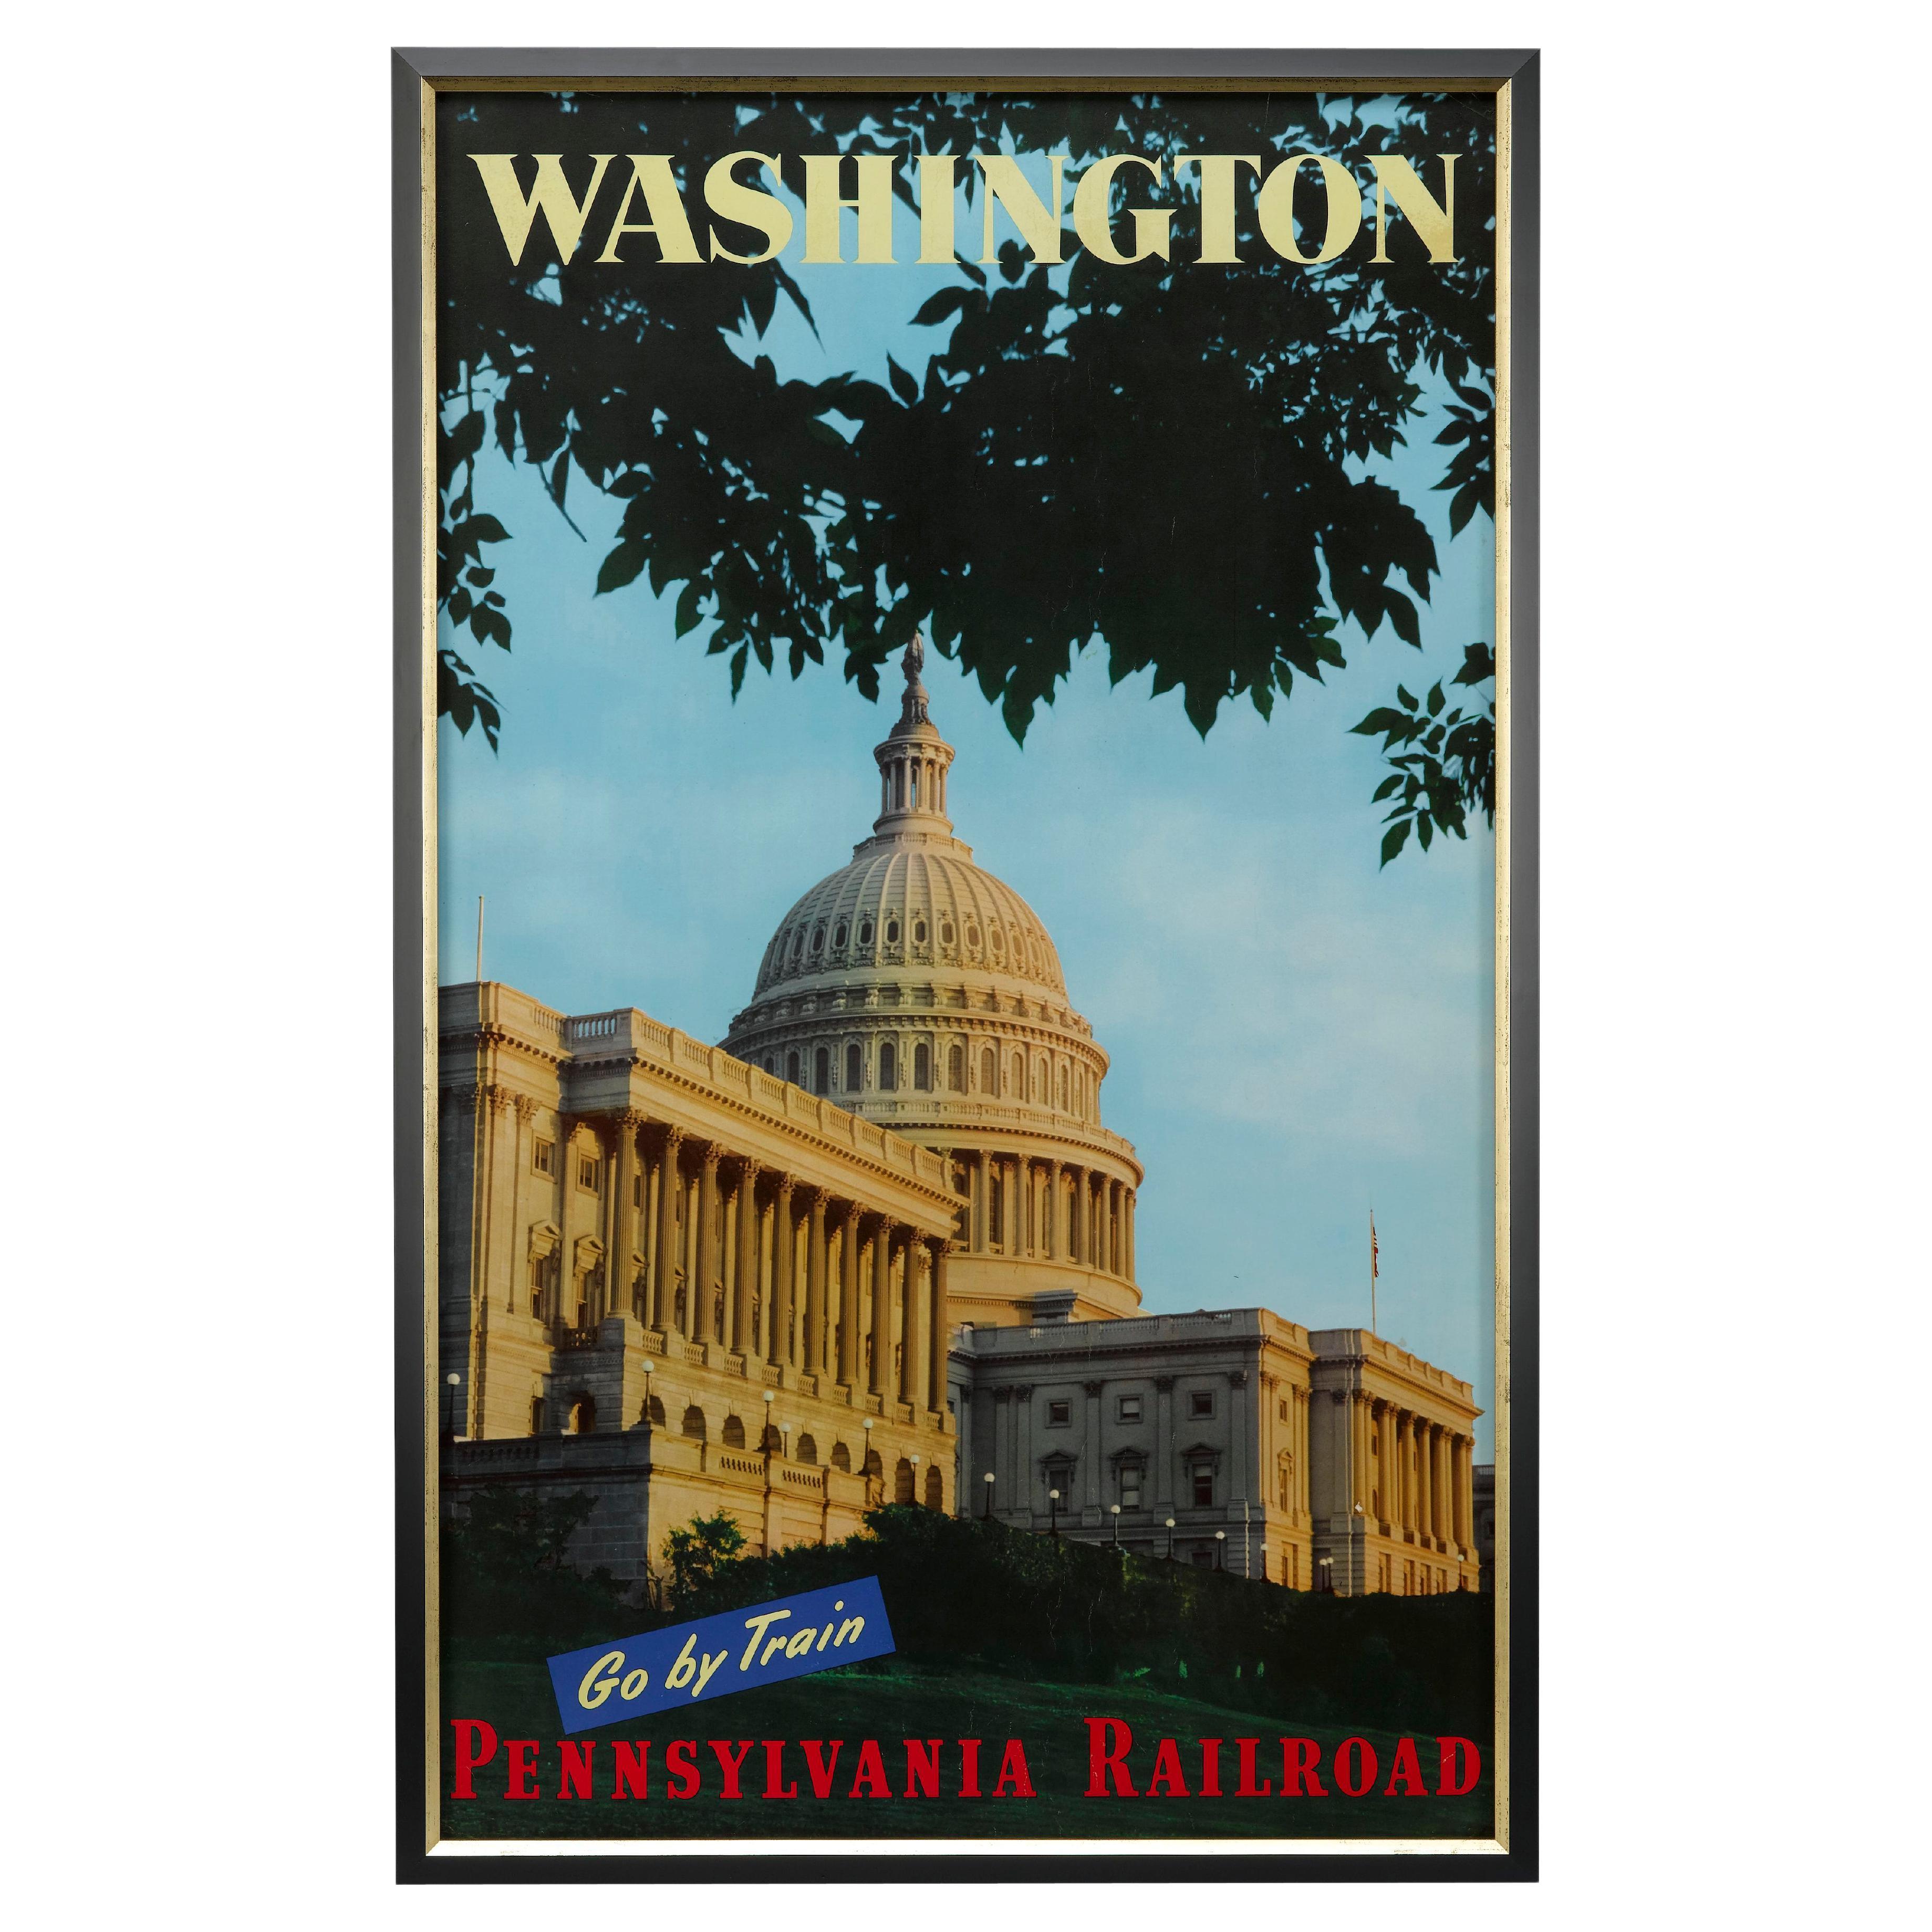 "Washington/ Go By Train/ Pennsylvania Railroad" Vintage Travel Poster For Sale